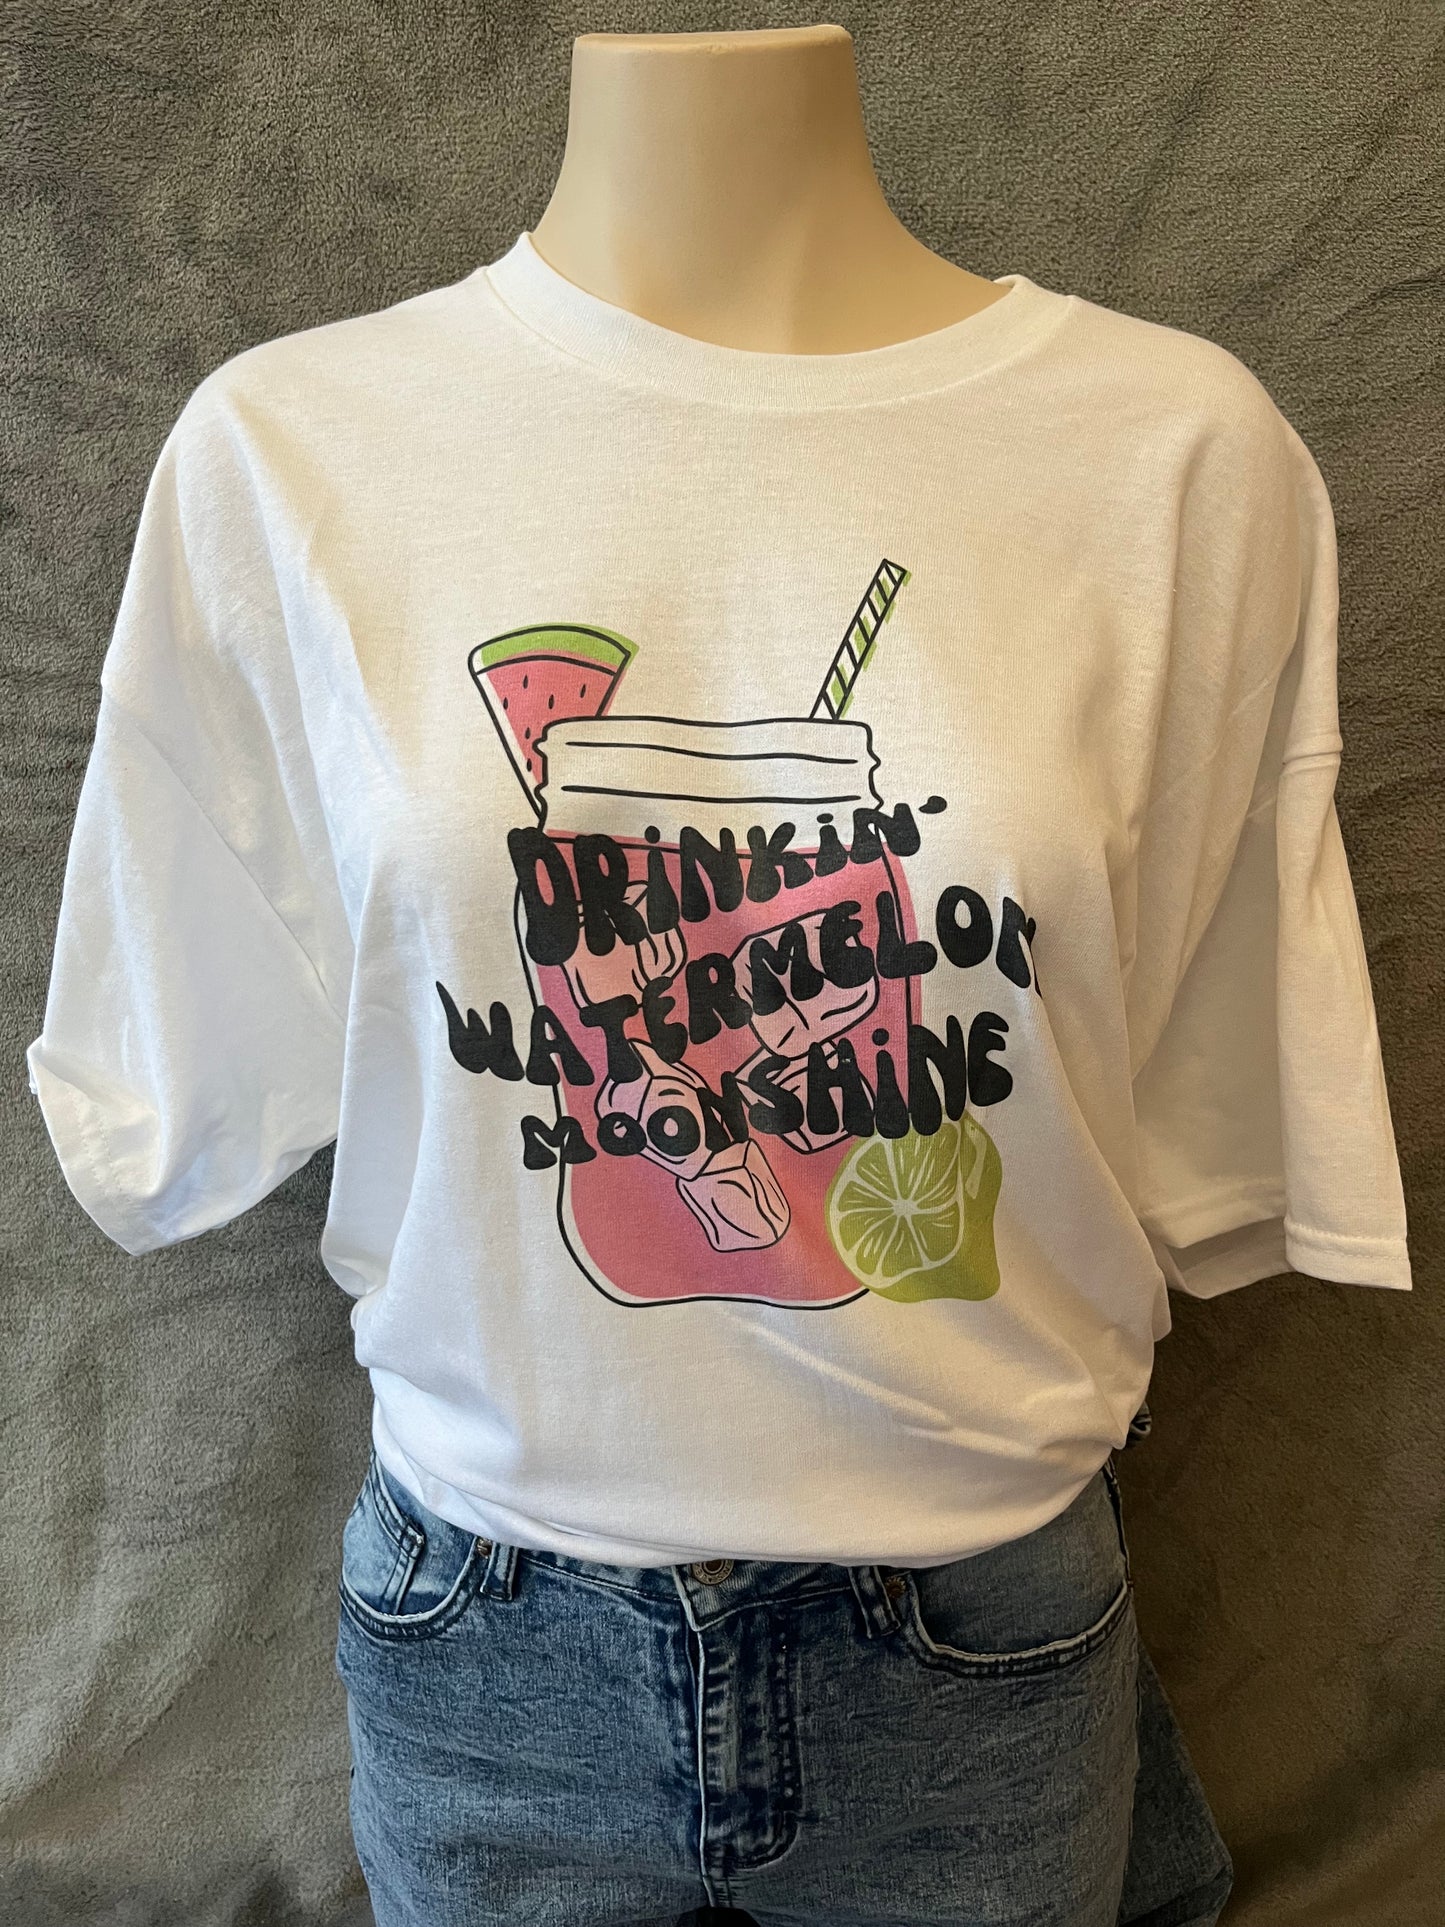 Drinkin’ Watermelon Moonshine Graphic T-shirt